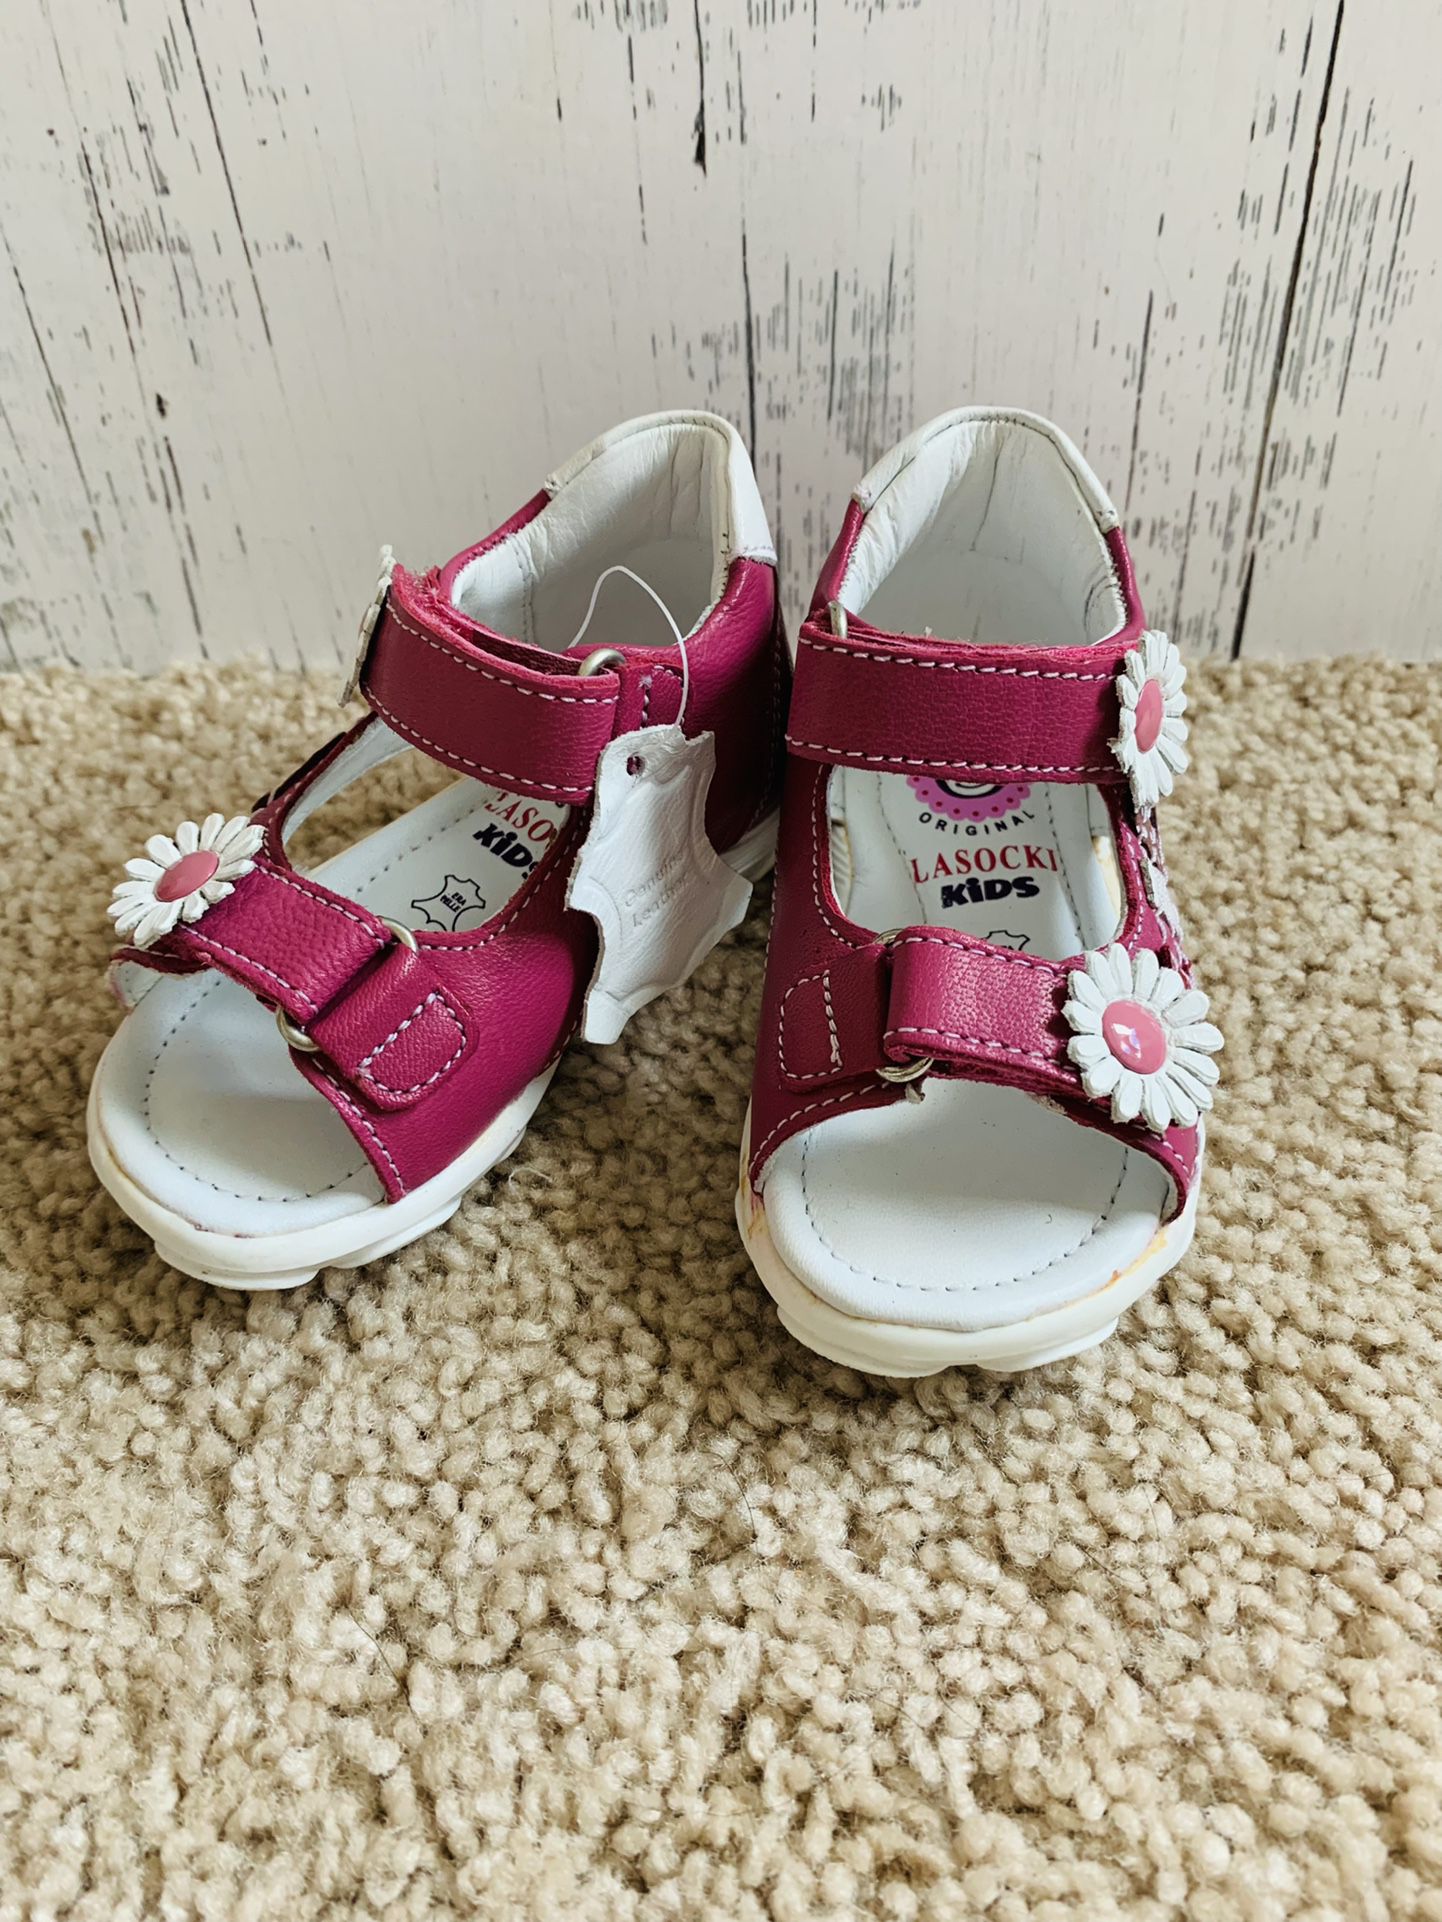 Kids Shoes, Size 5 1/2.